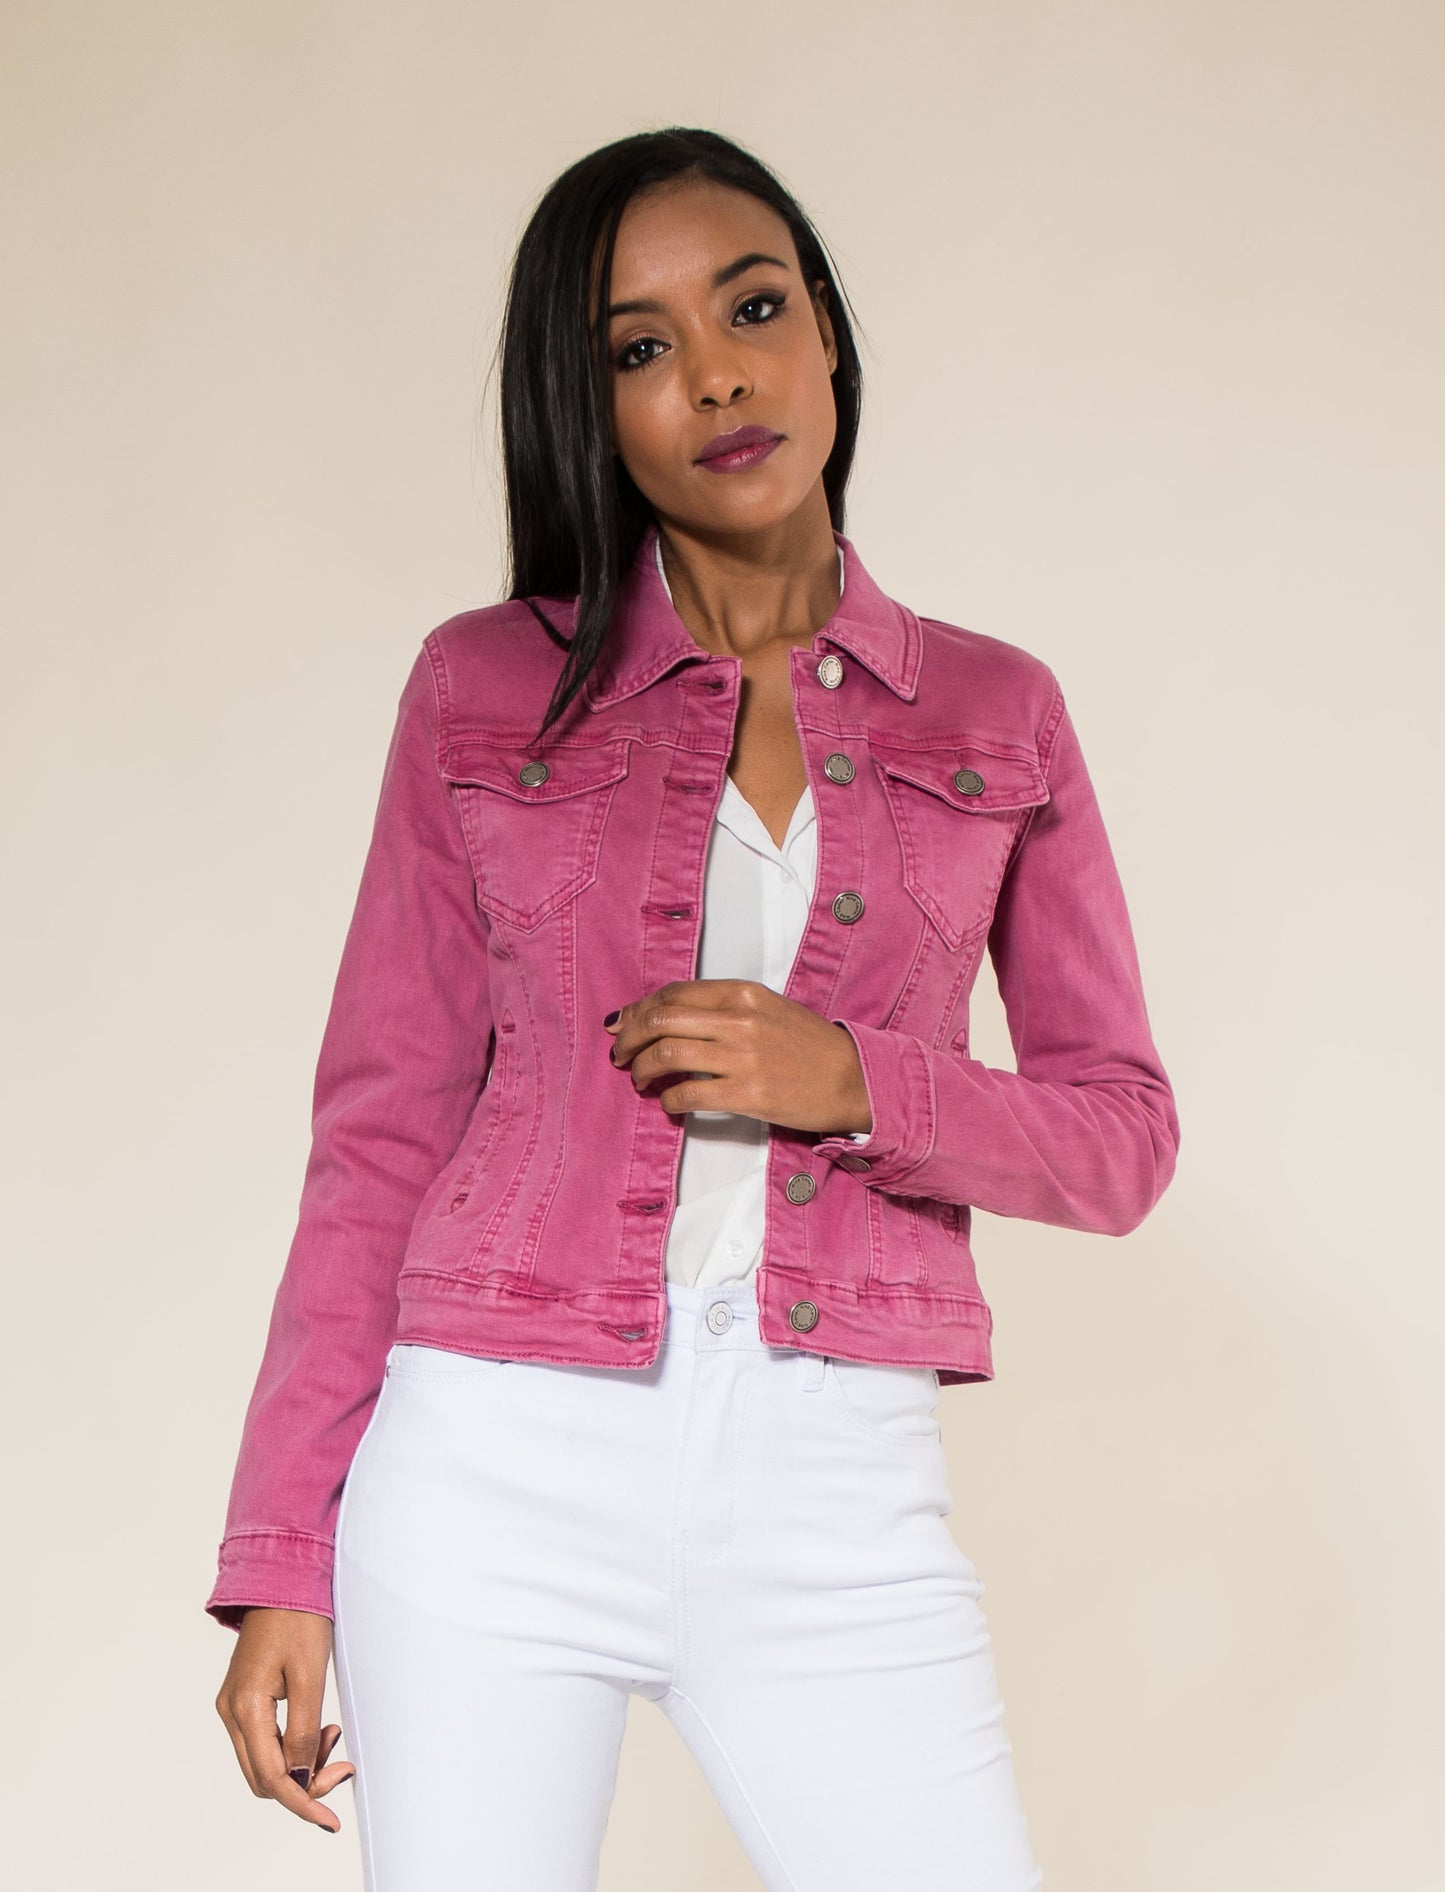 Wholesale Raspberry Color Stretch Jeans Jacket